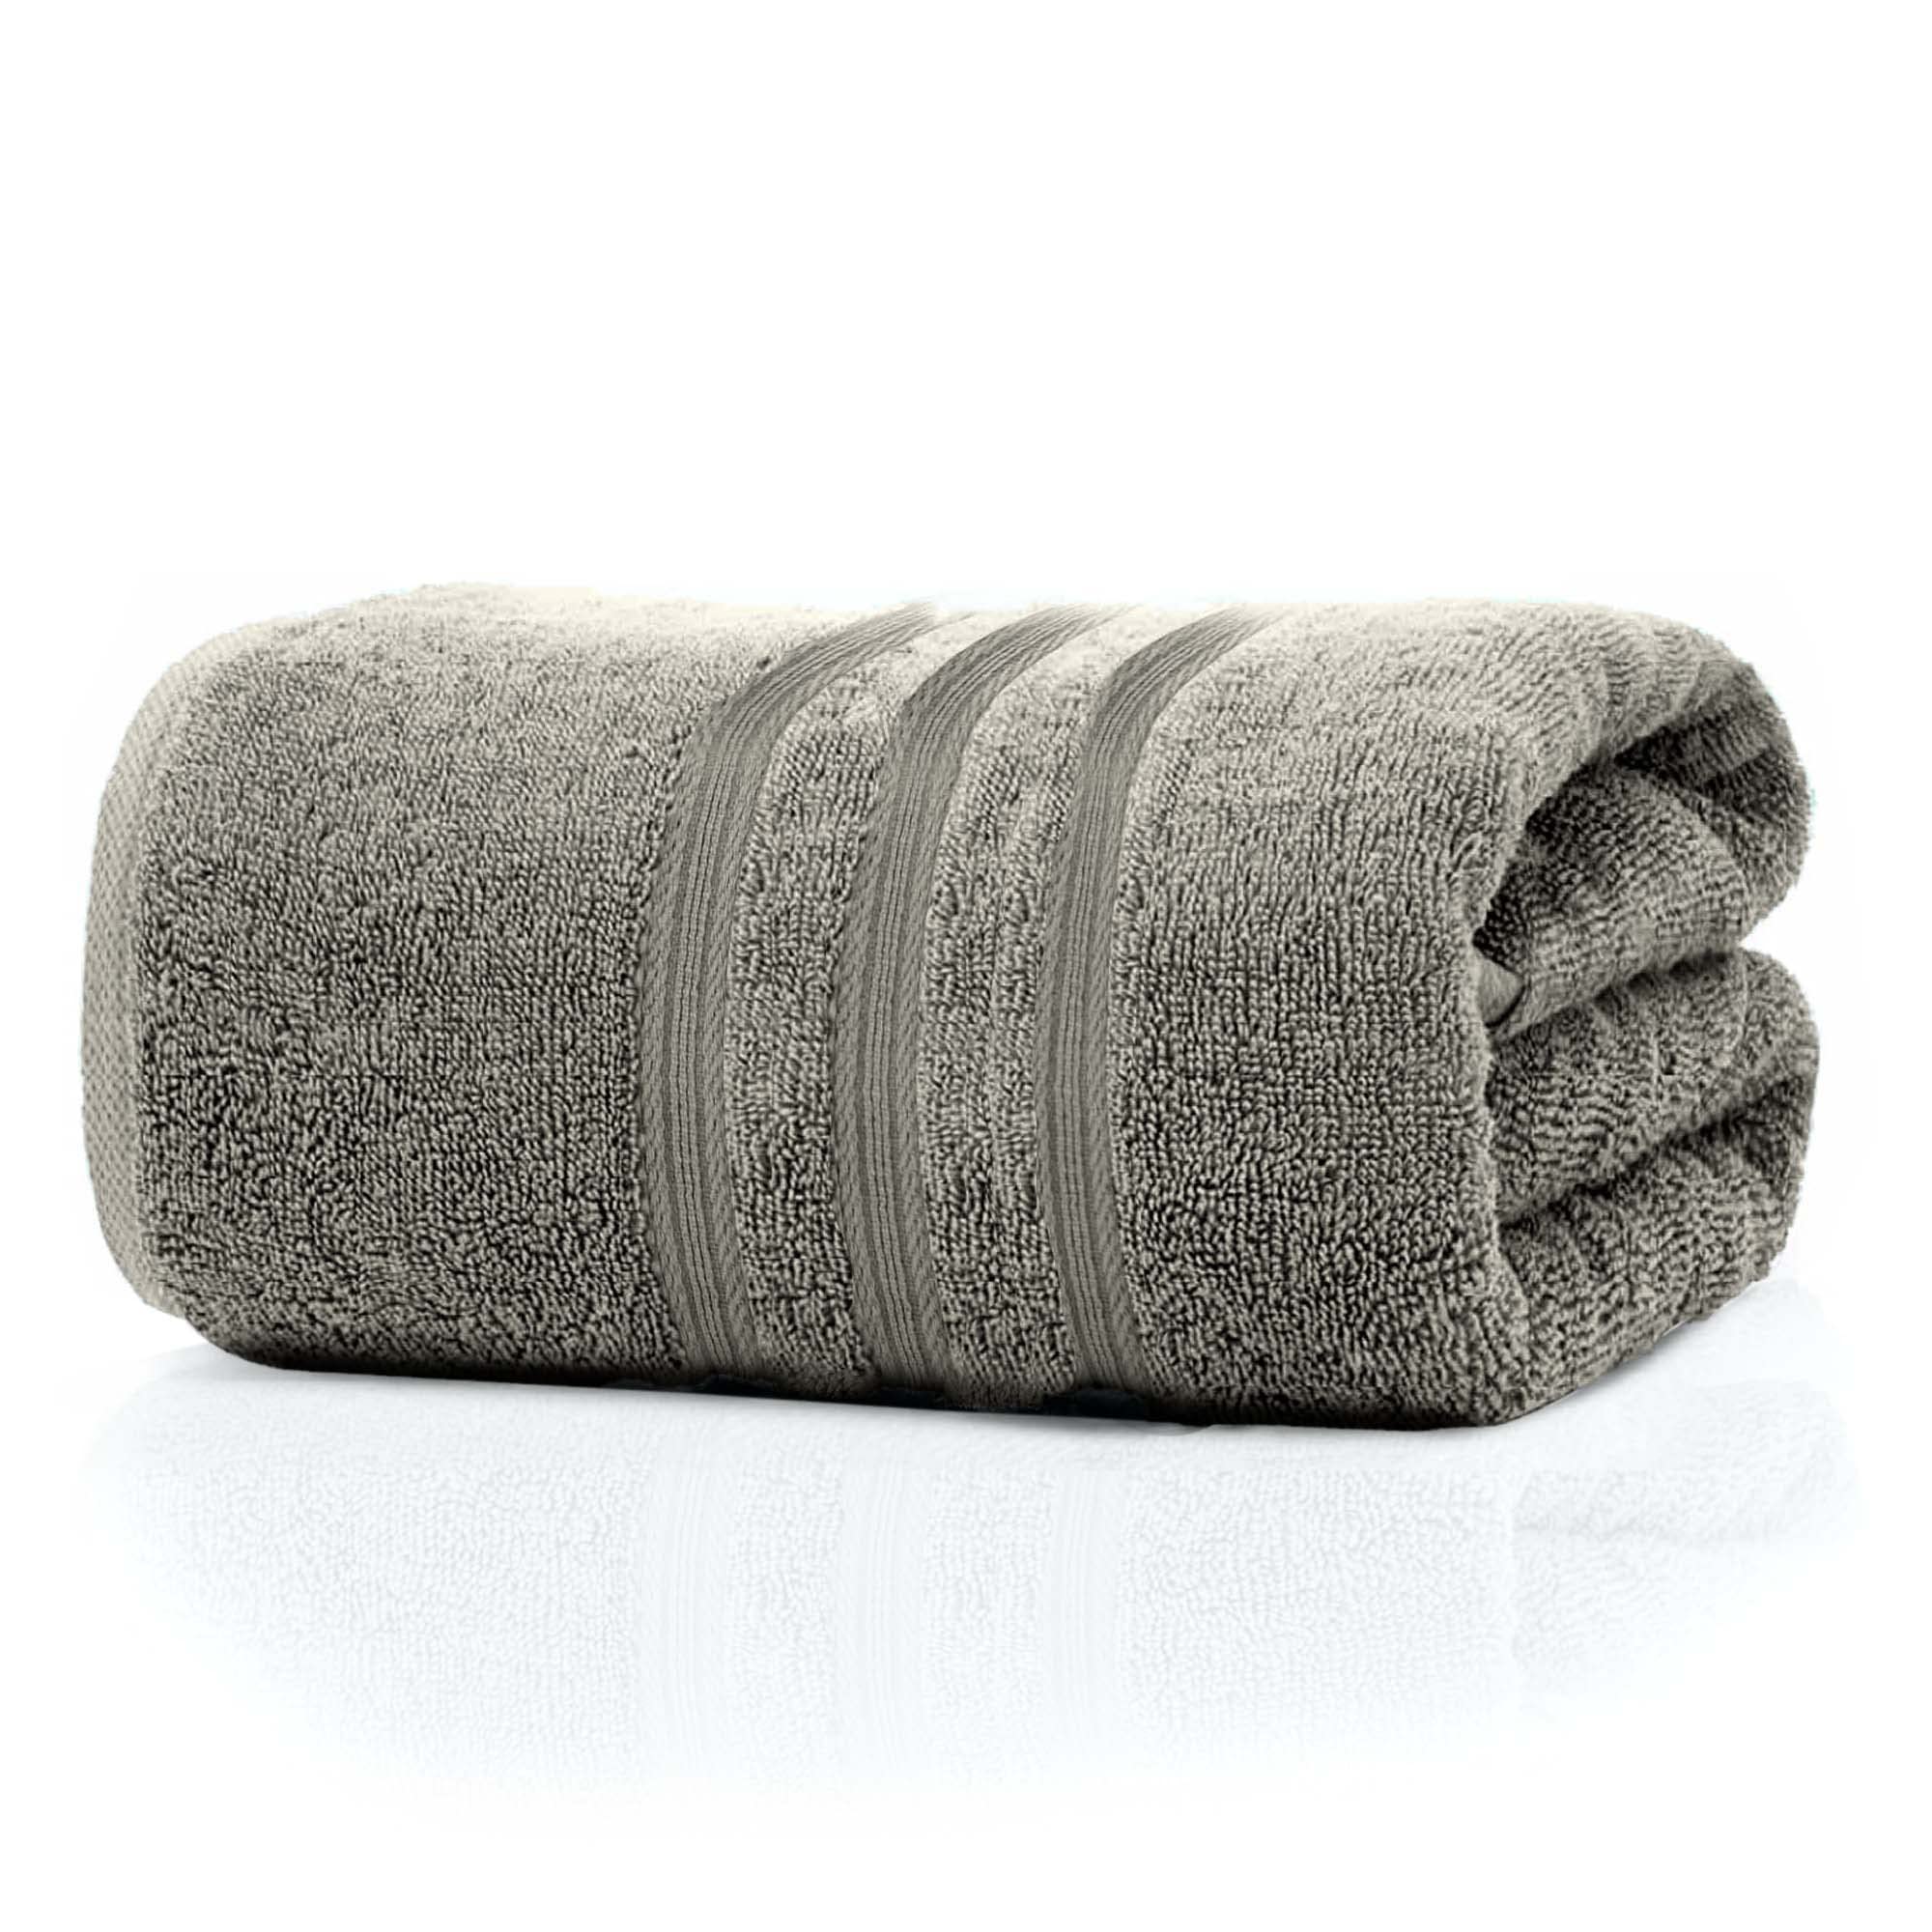 Pierre Donna Bath Towel, Highly Absorbent (Dark Grey)